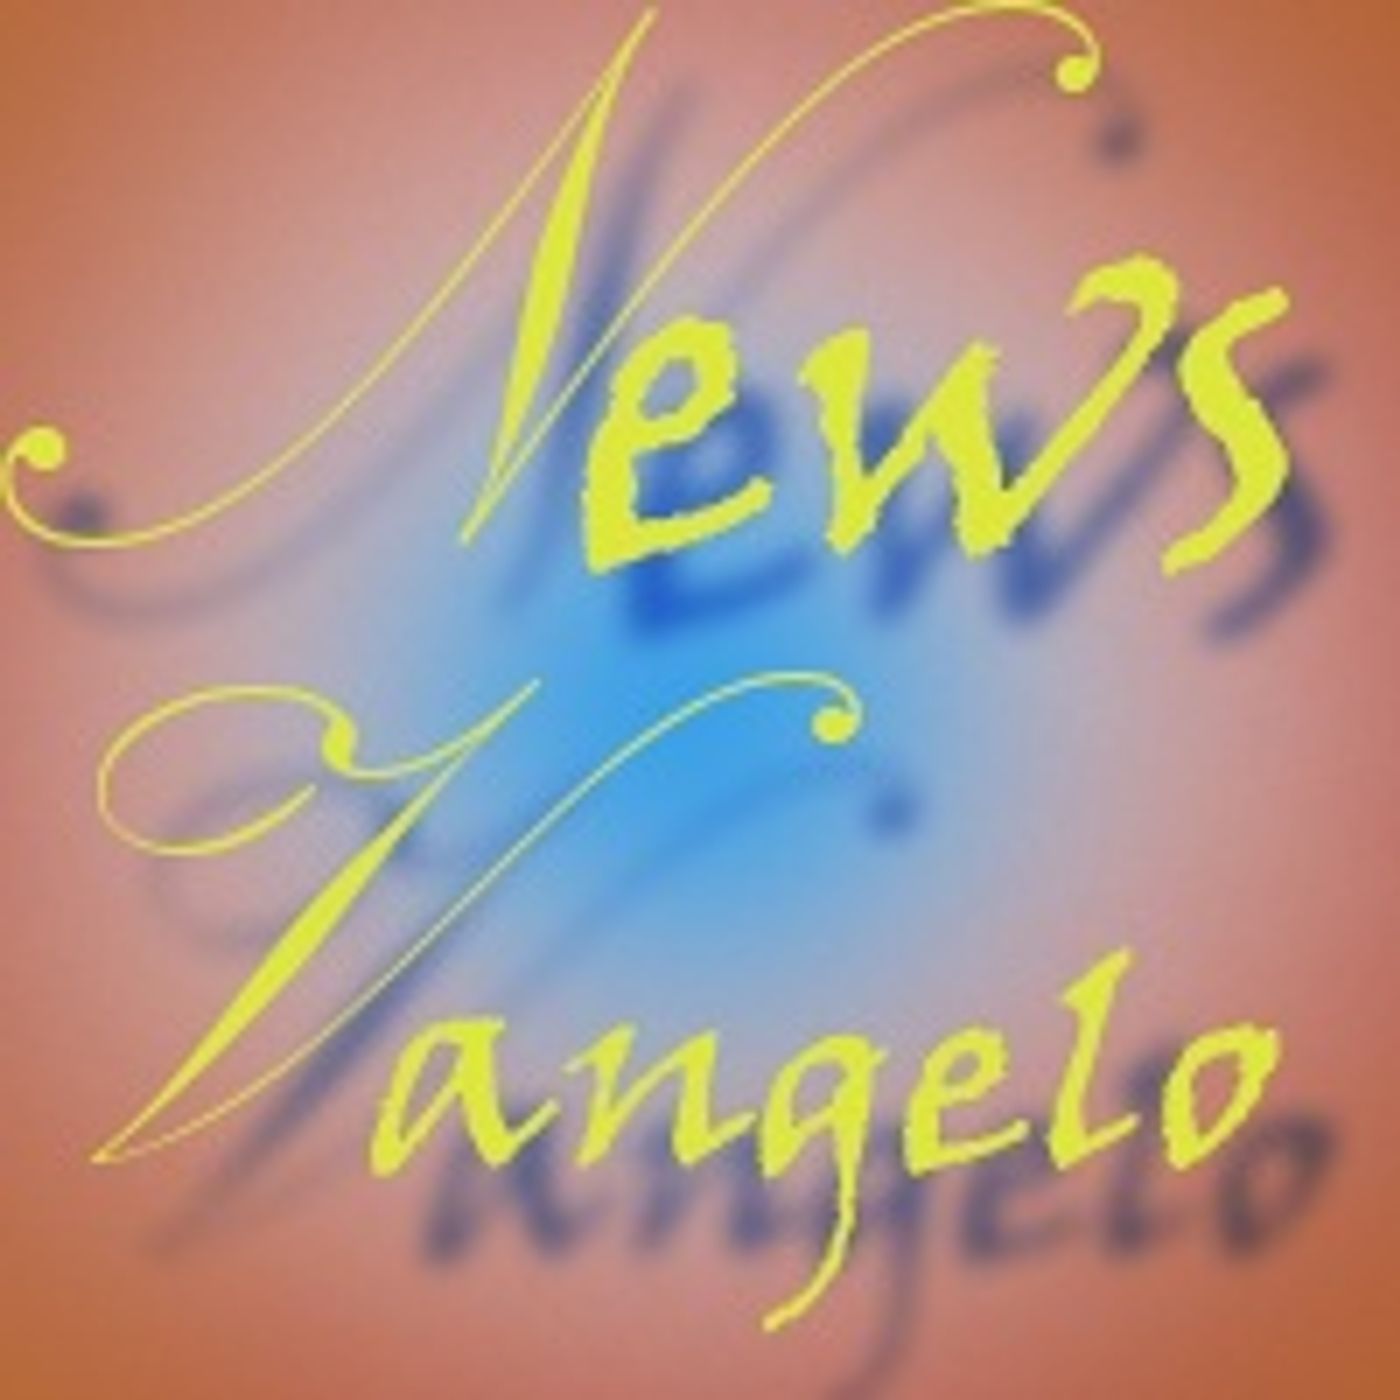 NewsVangelo